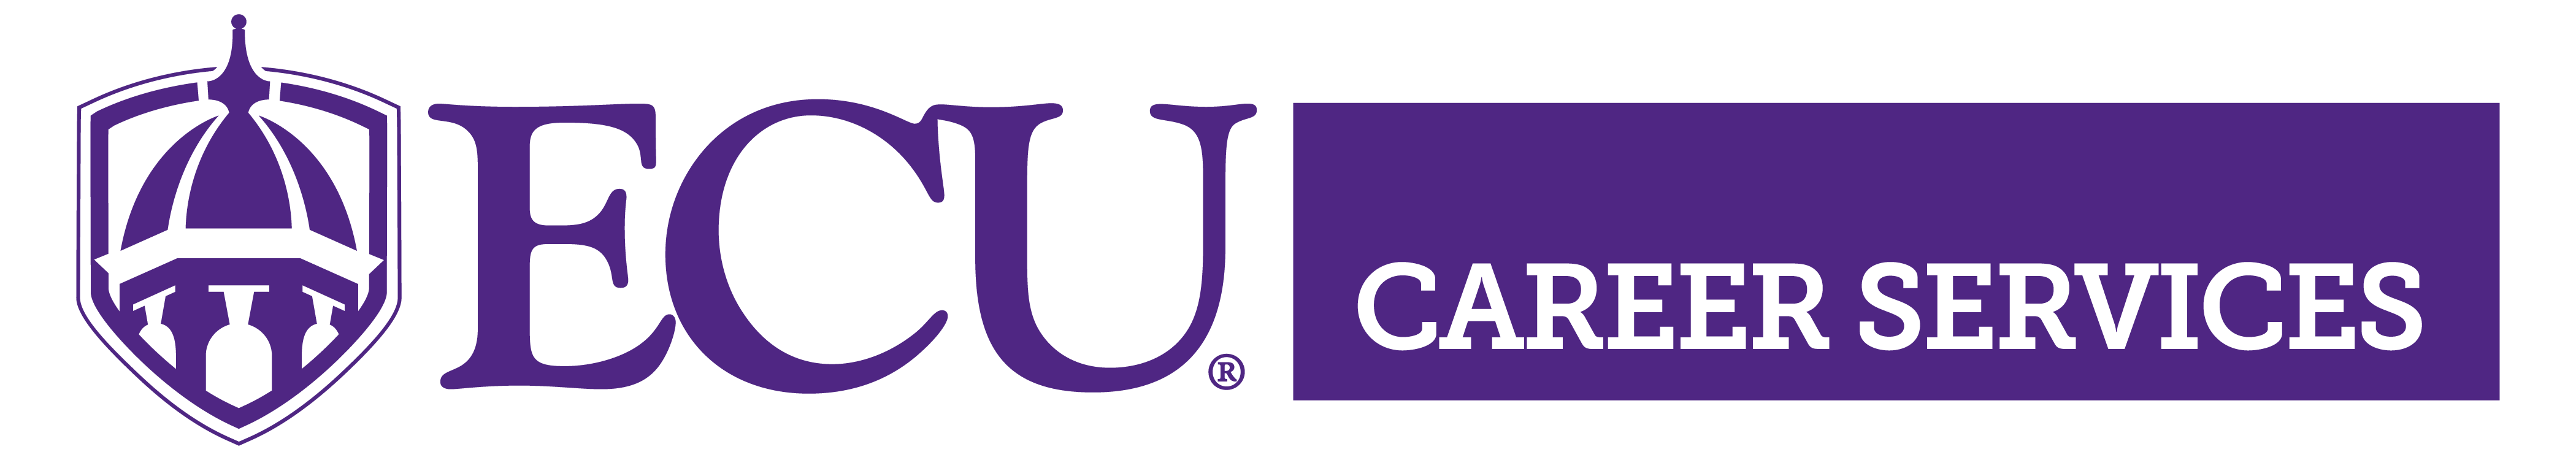 ECU Career Services Logo